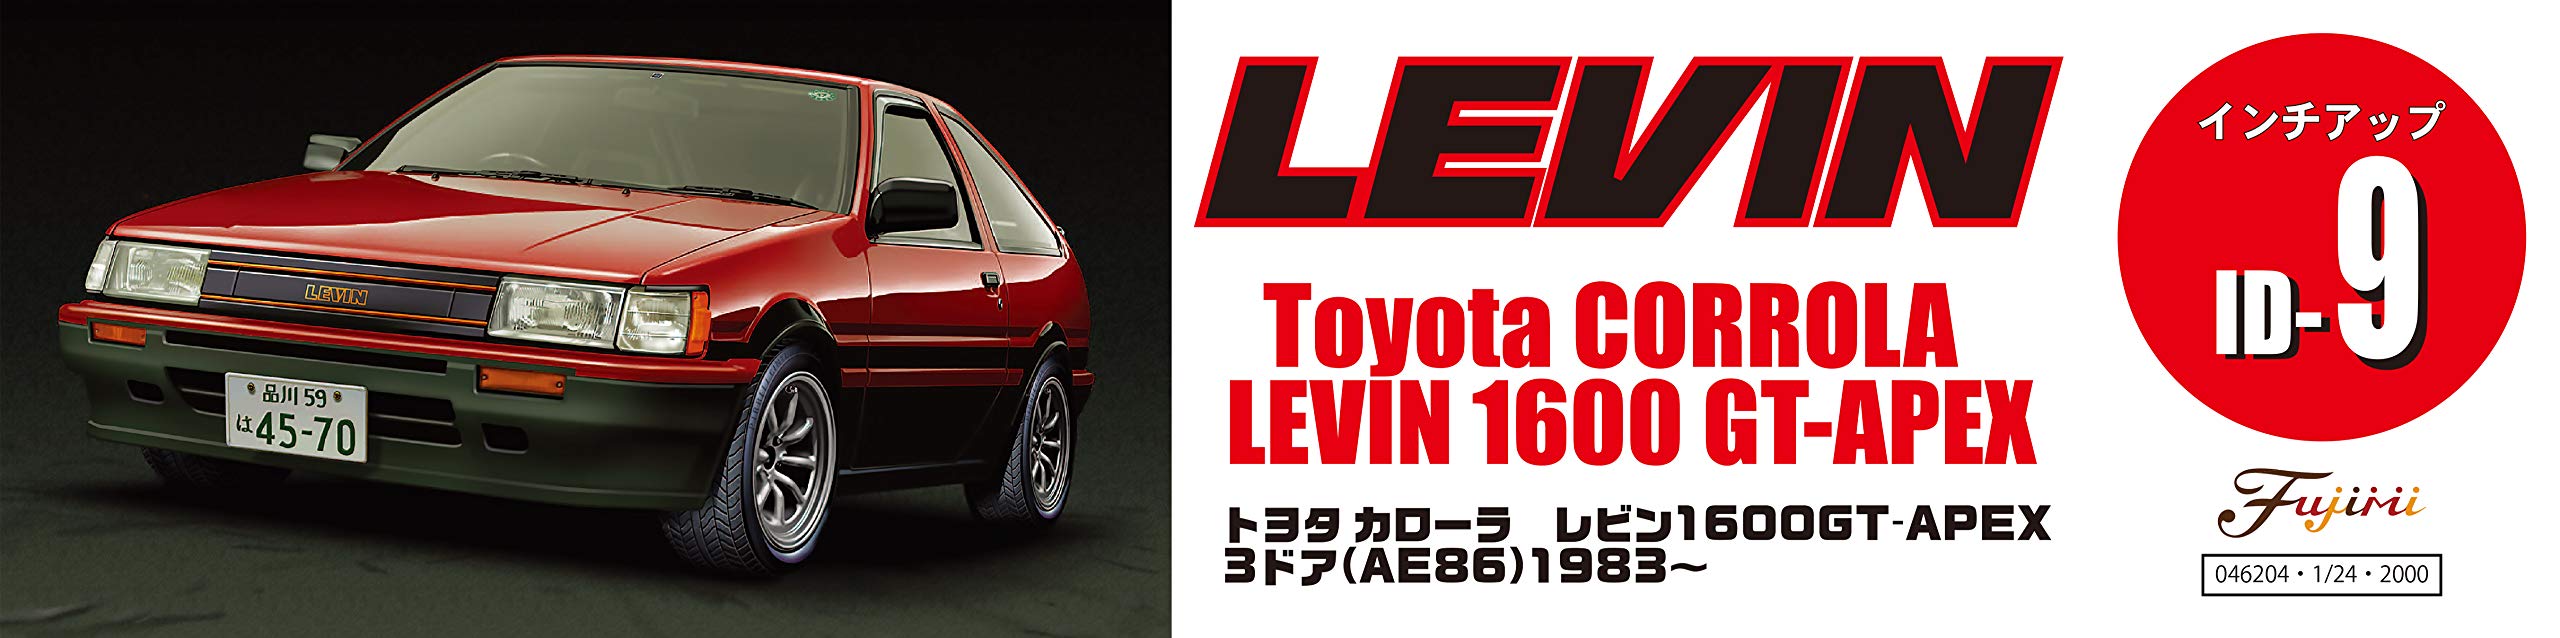 Fujimi Inch Up 1/24 Nr. 9 Toyota Corolla Levin 1600 83 Japanisches vorlackiertes Automodell